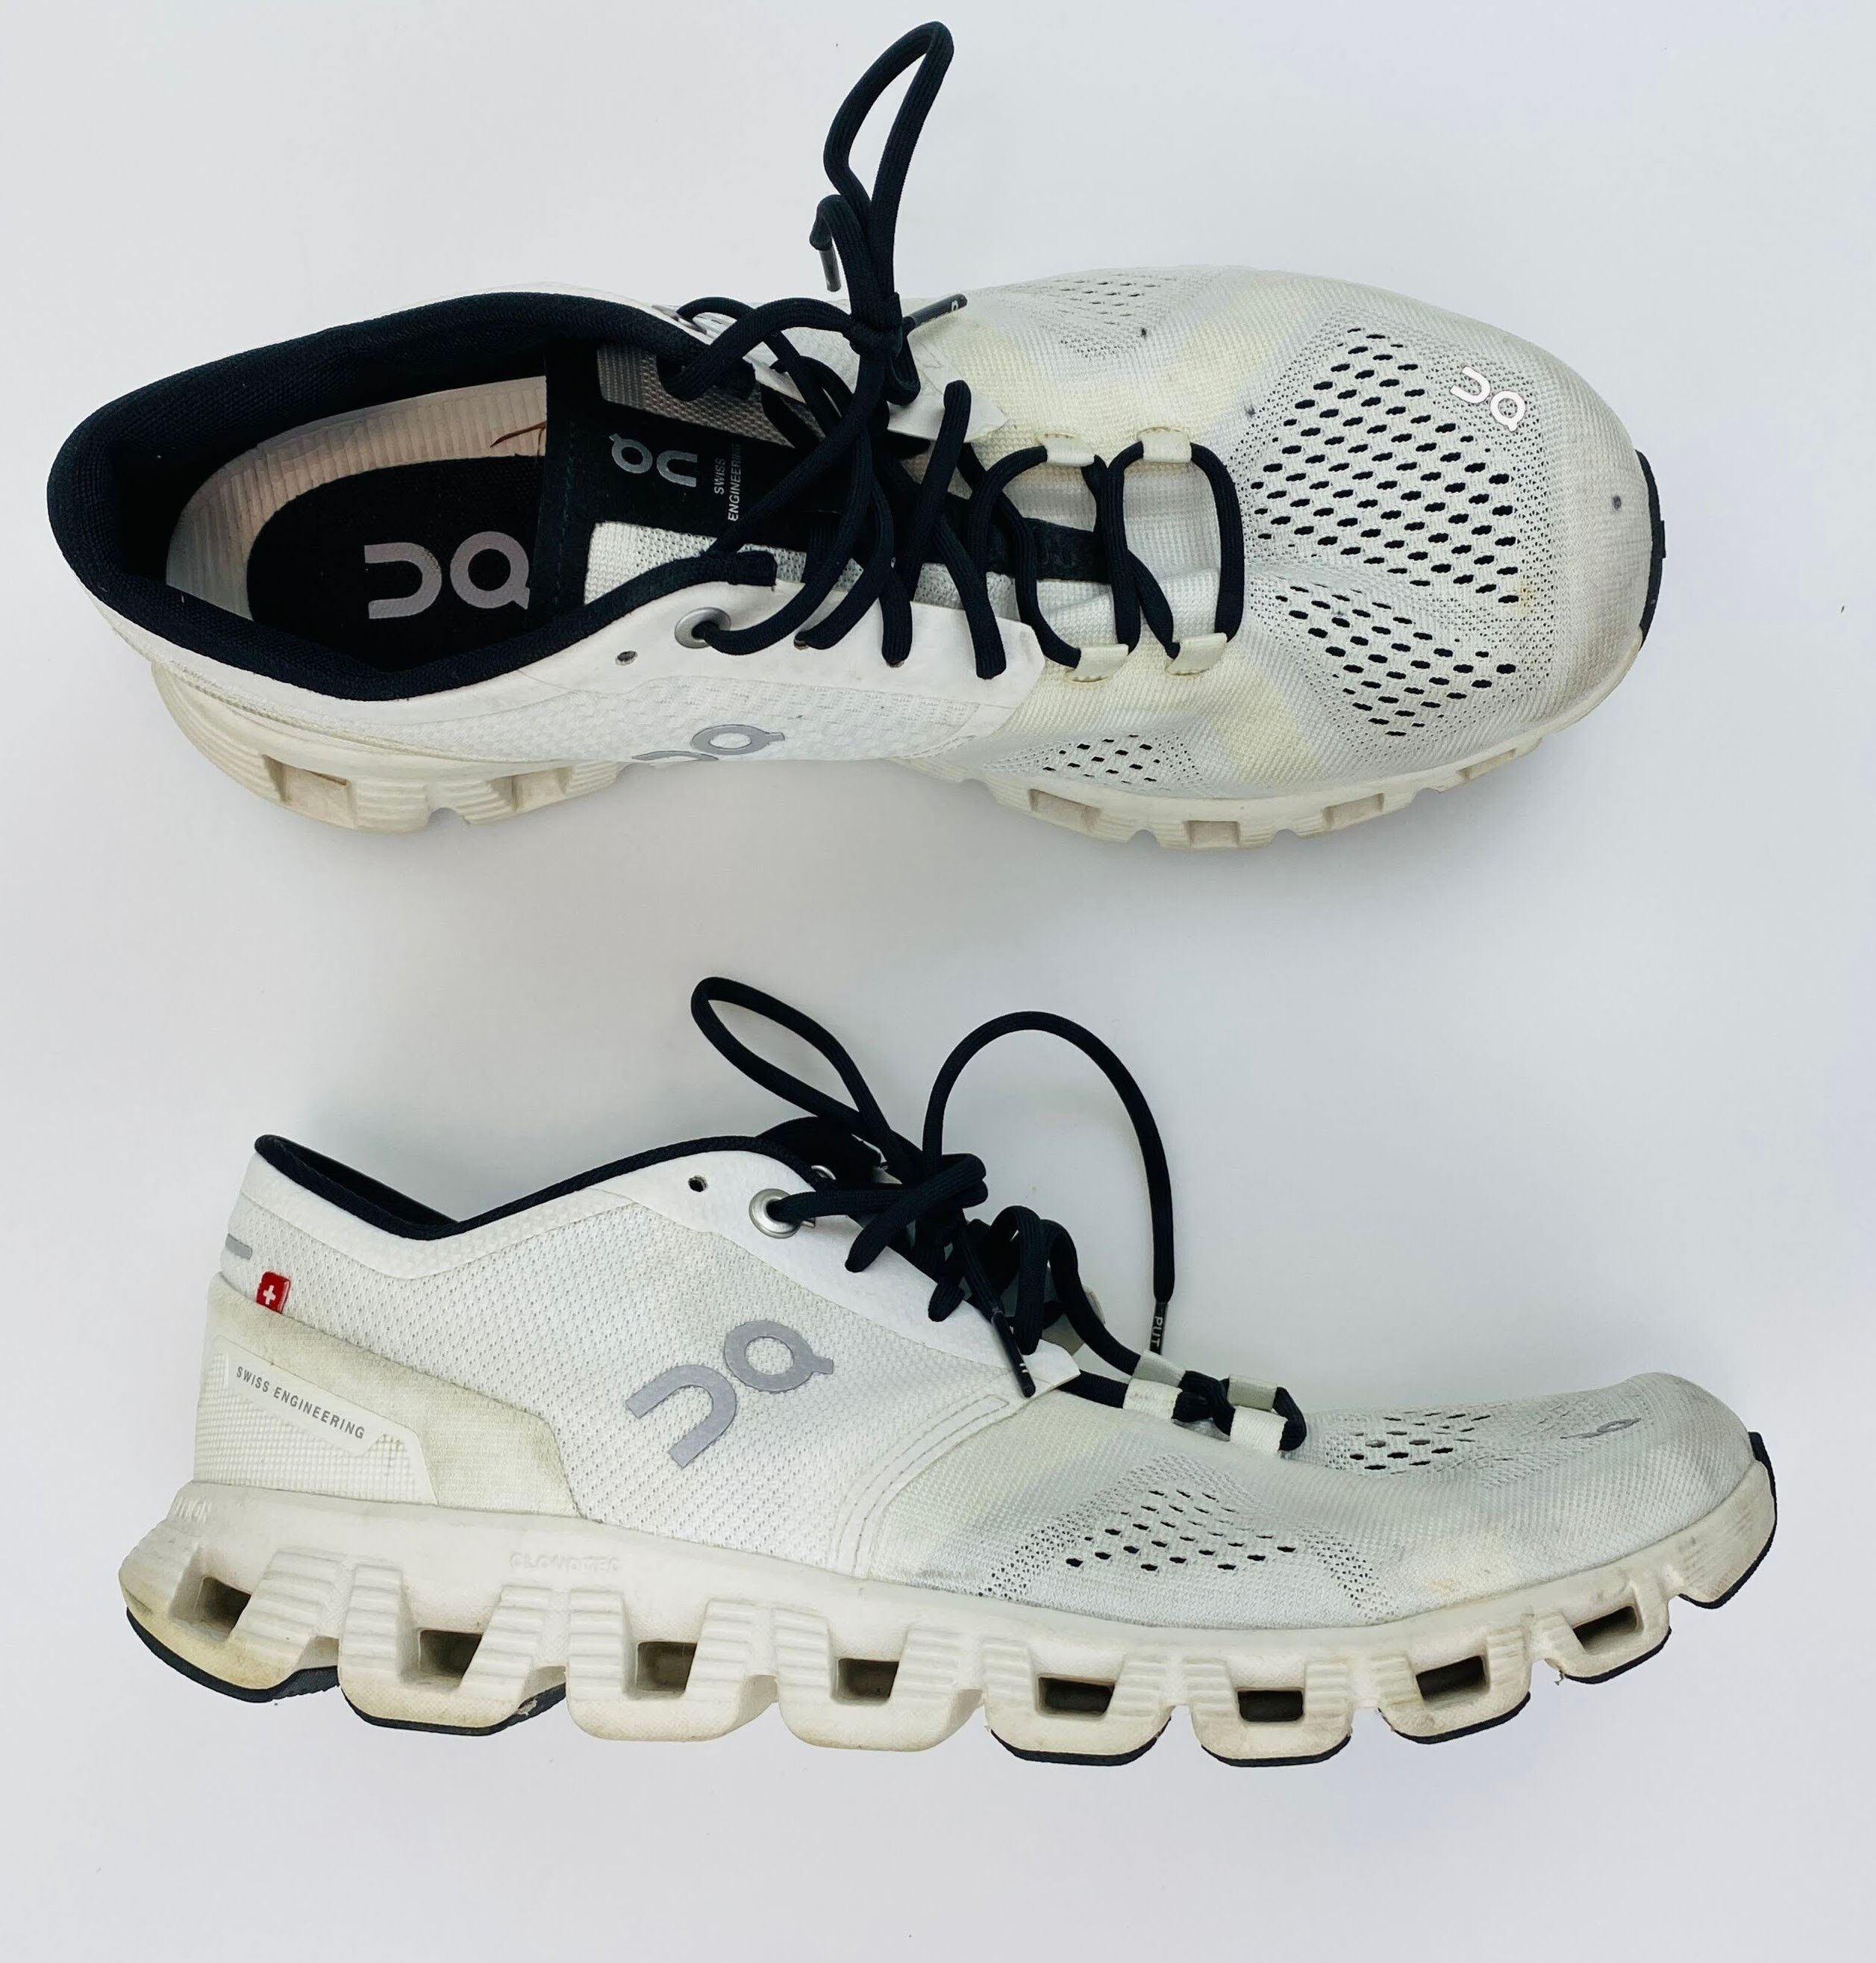 https://images.hardloop.fr/429330/on-running-seconde-main-chaussures-running-femme-blanc-405.jpg?w=auto&h=auto&q=80